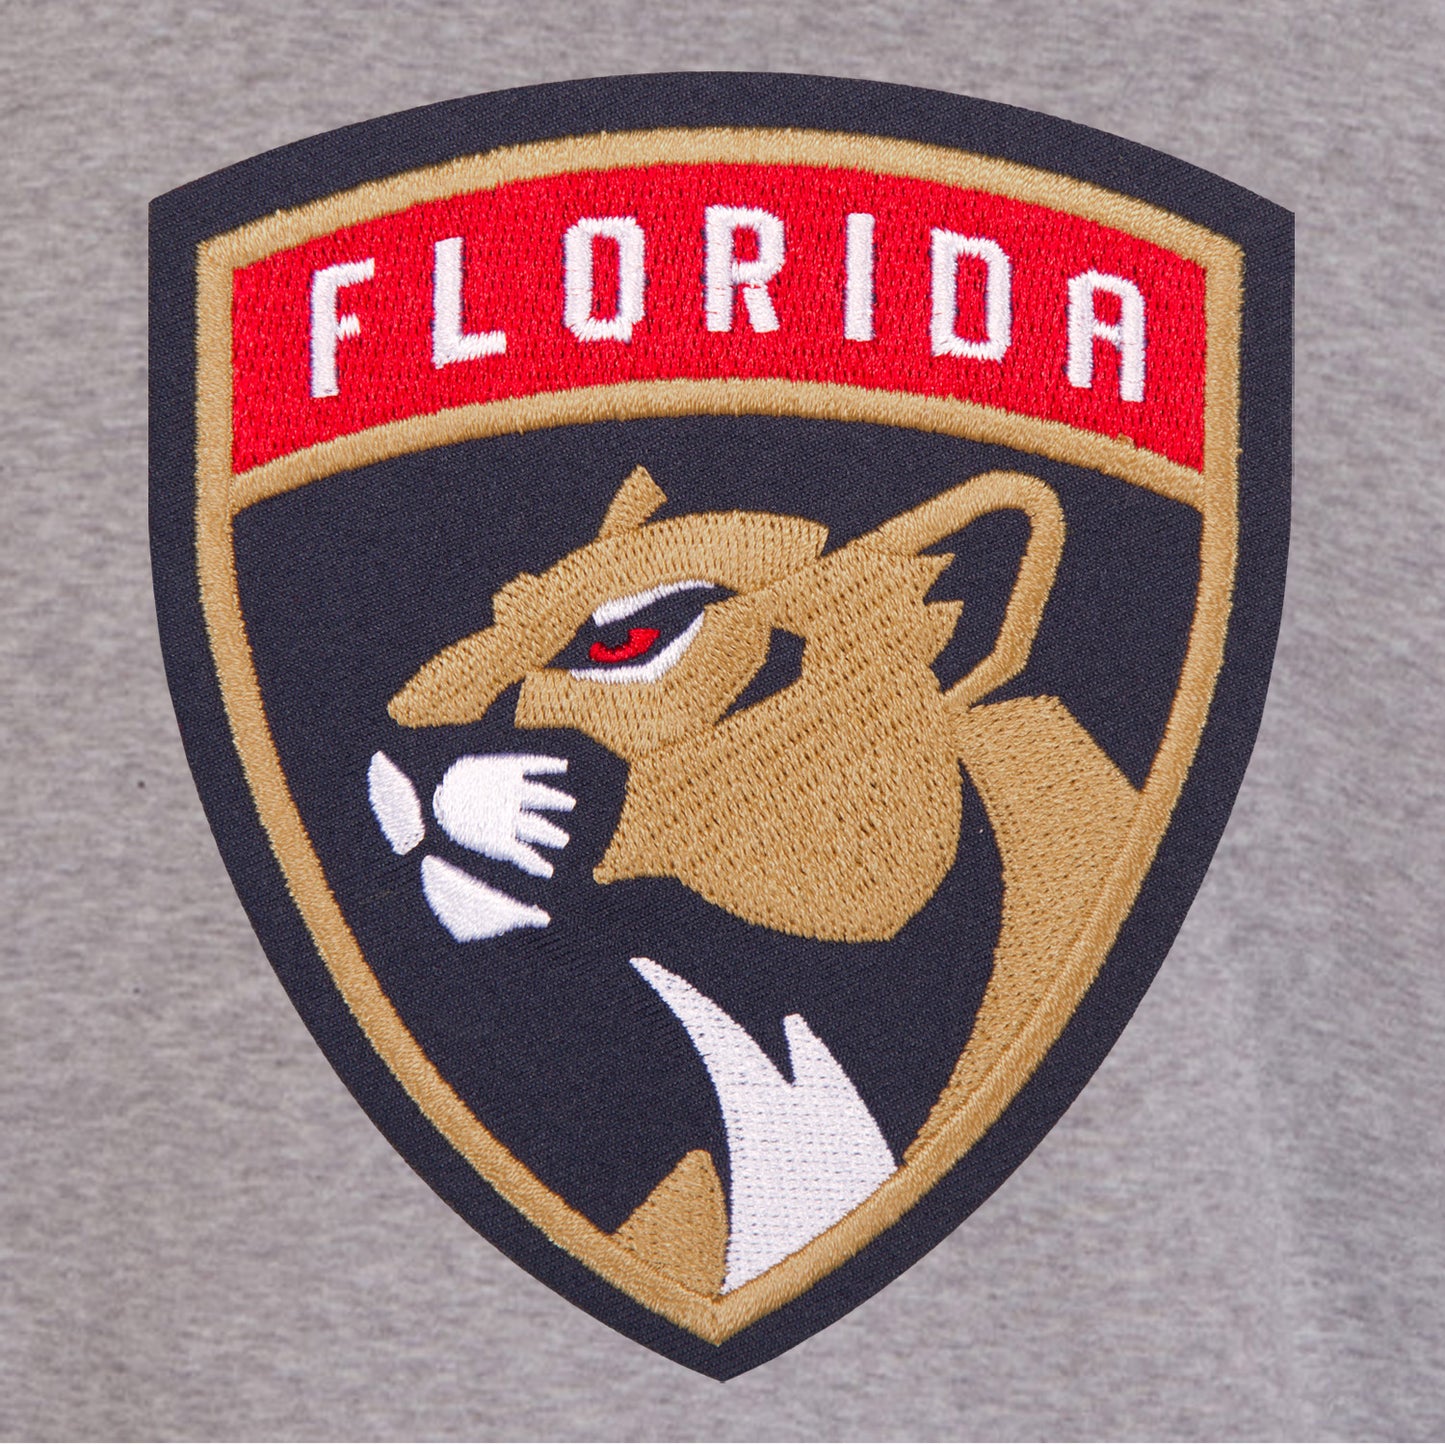 Florida Panthers Reversible Two-Tone Fleece Jacket